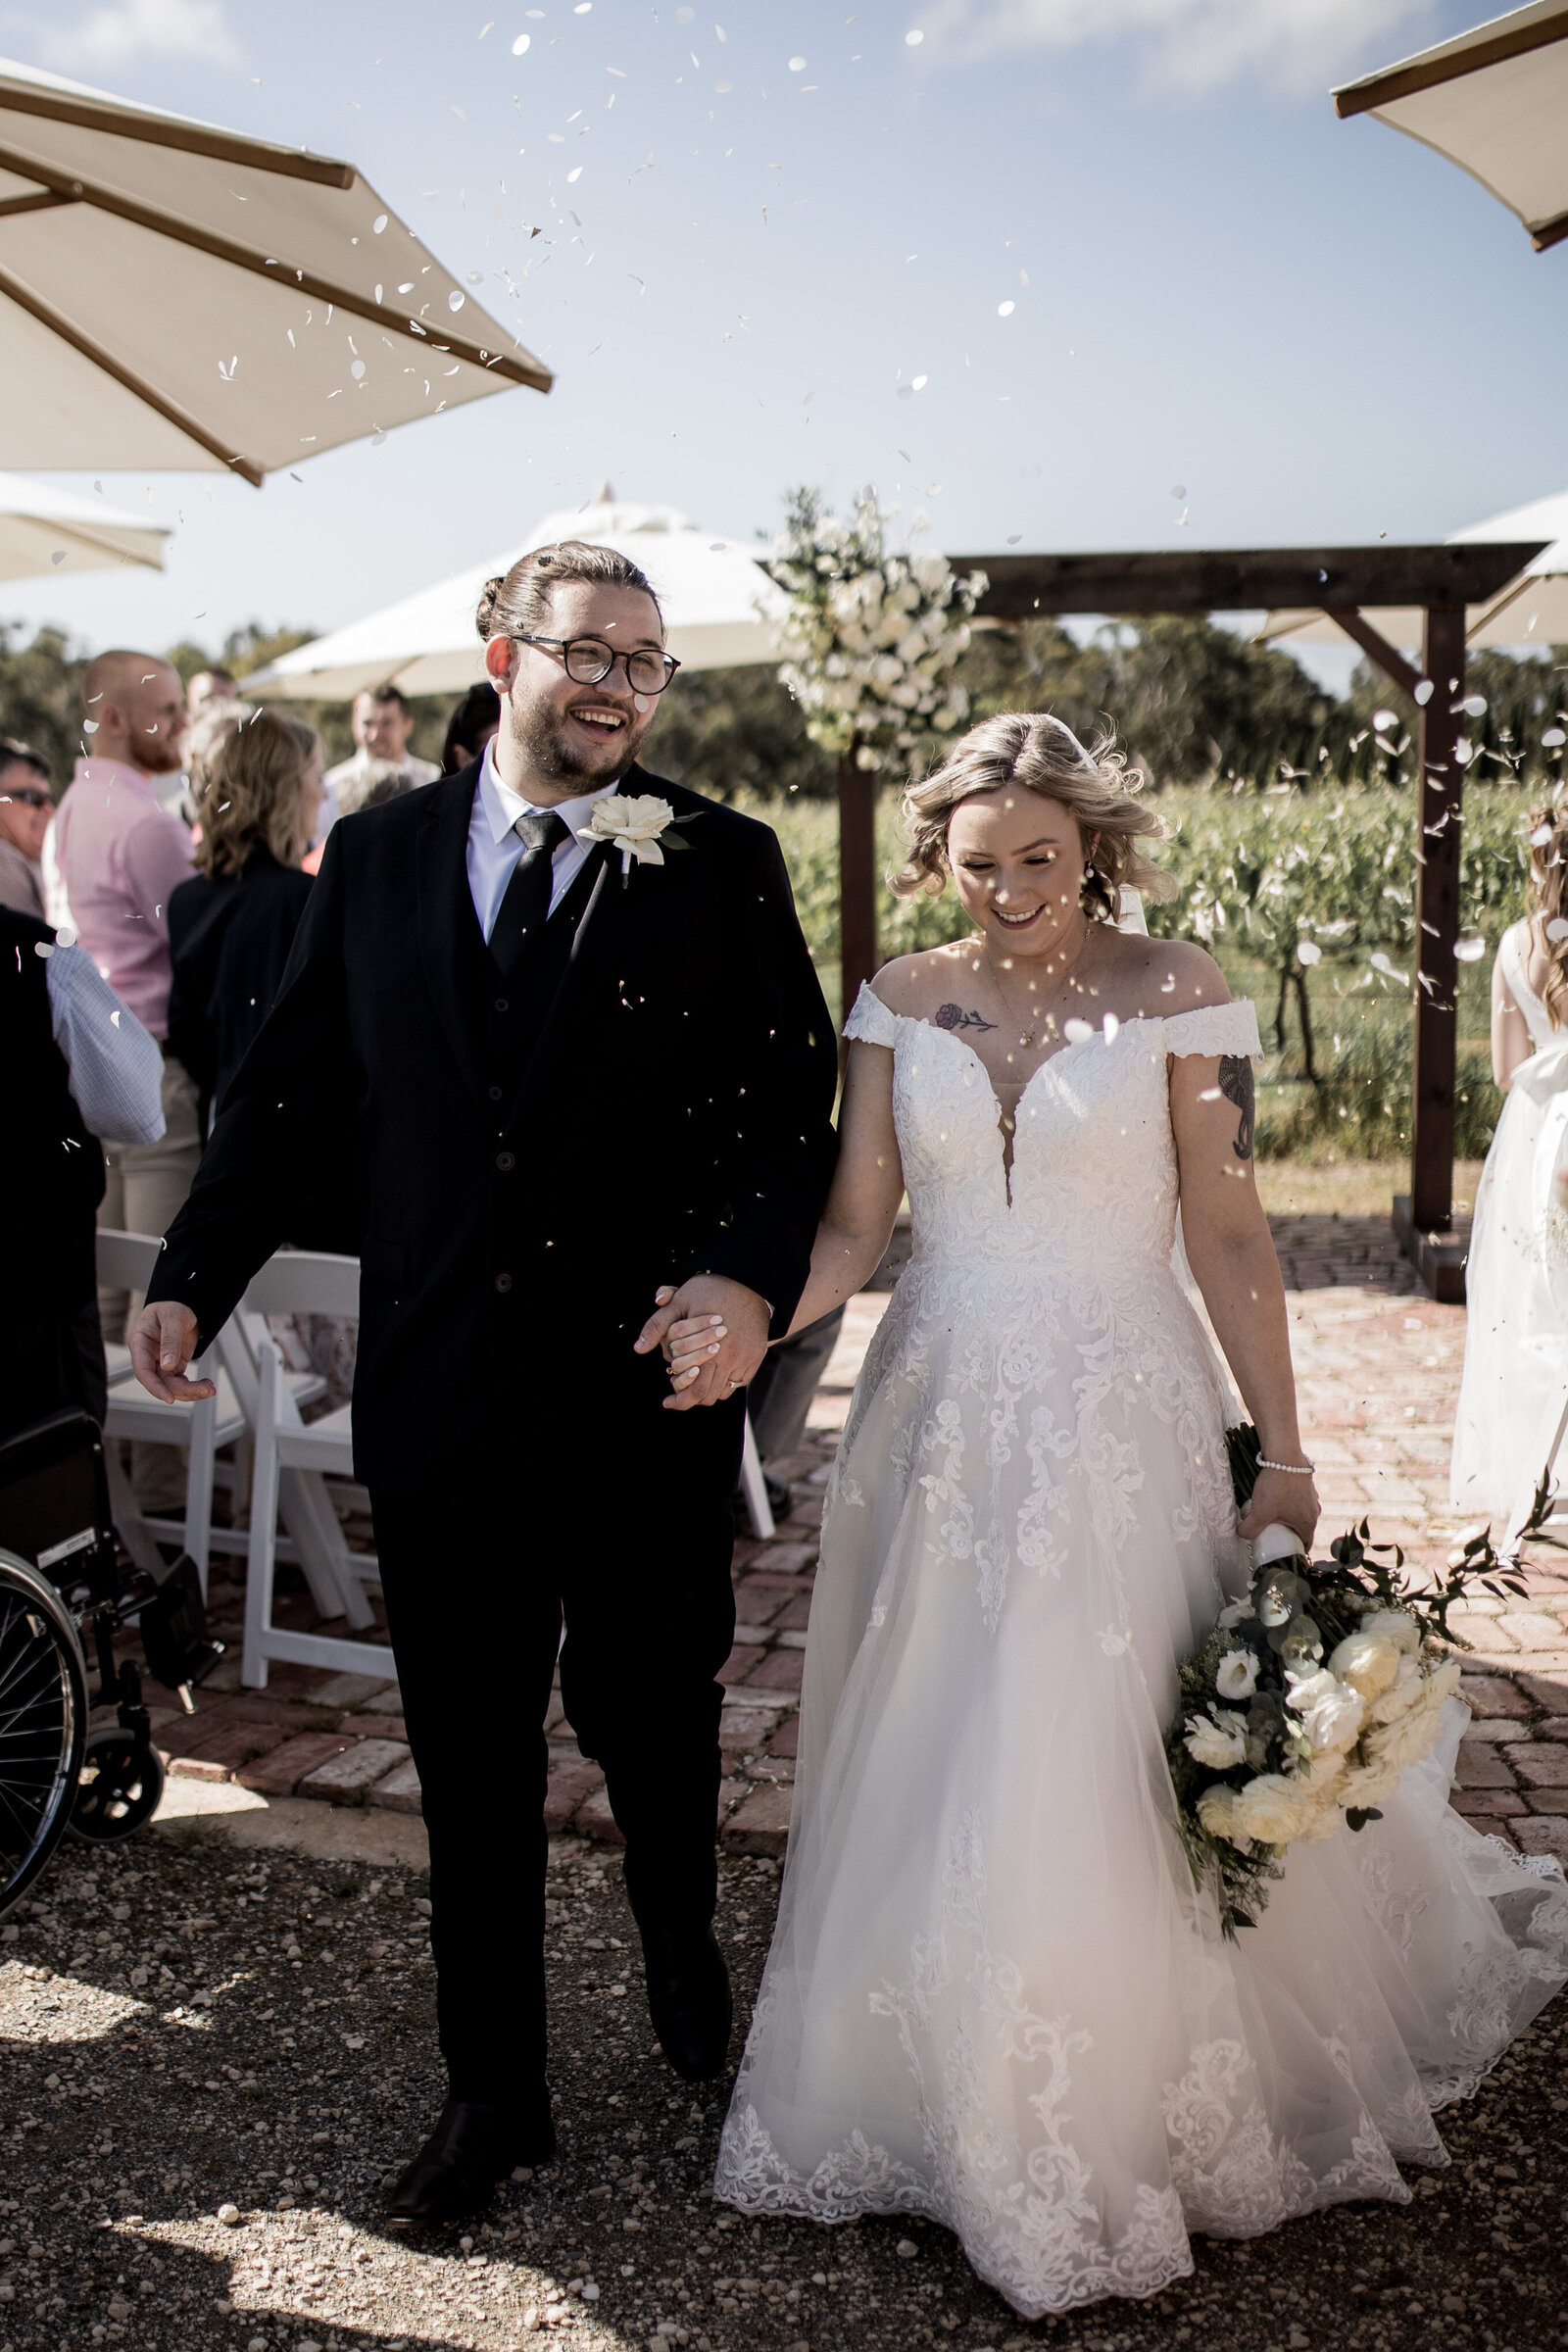 Maxine-Chris-Rexvil-Photography-Adelaide-Wedding-Photographer-352